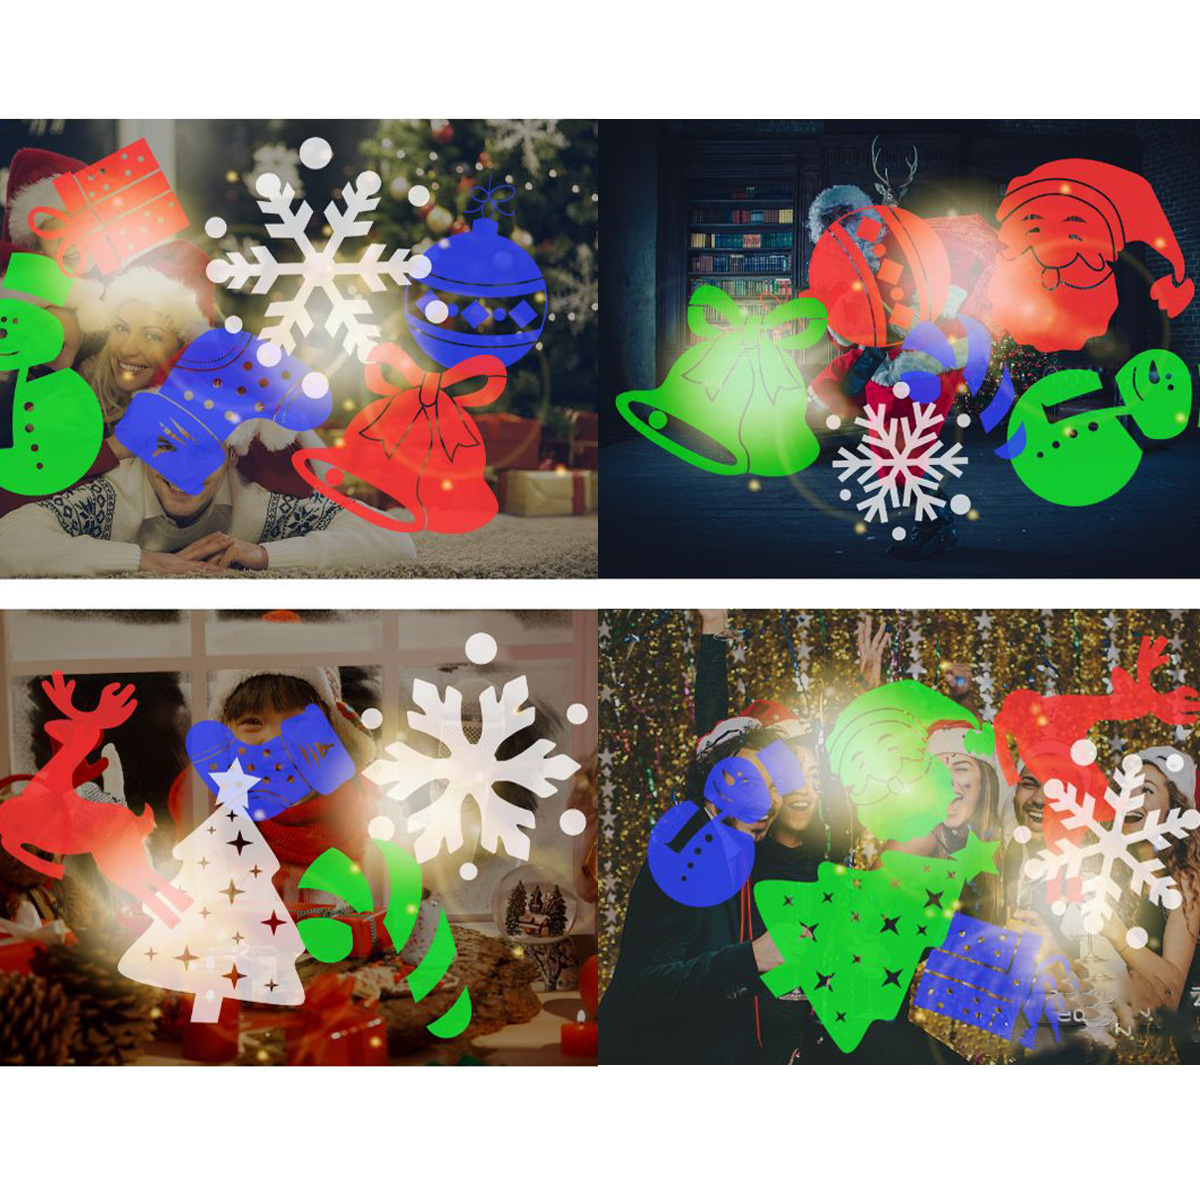 Christmas-12-Patterns-Flashlight-Projector-Lights-Garden-Decorative-Lamp-Light-Waterproof-Sparkling--1792180-10